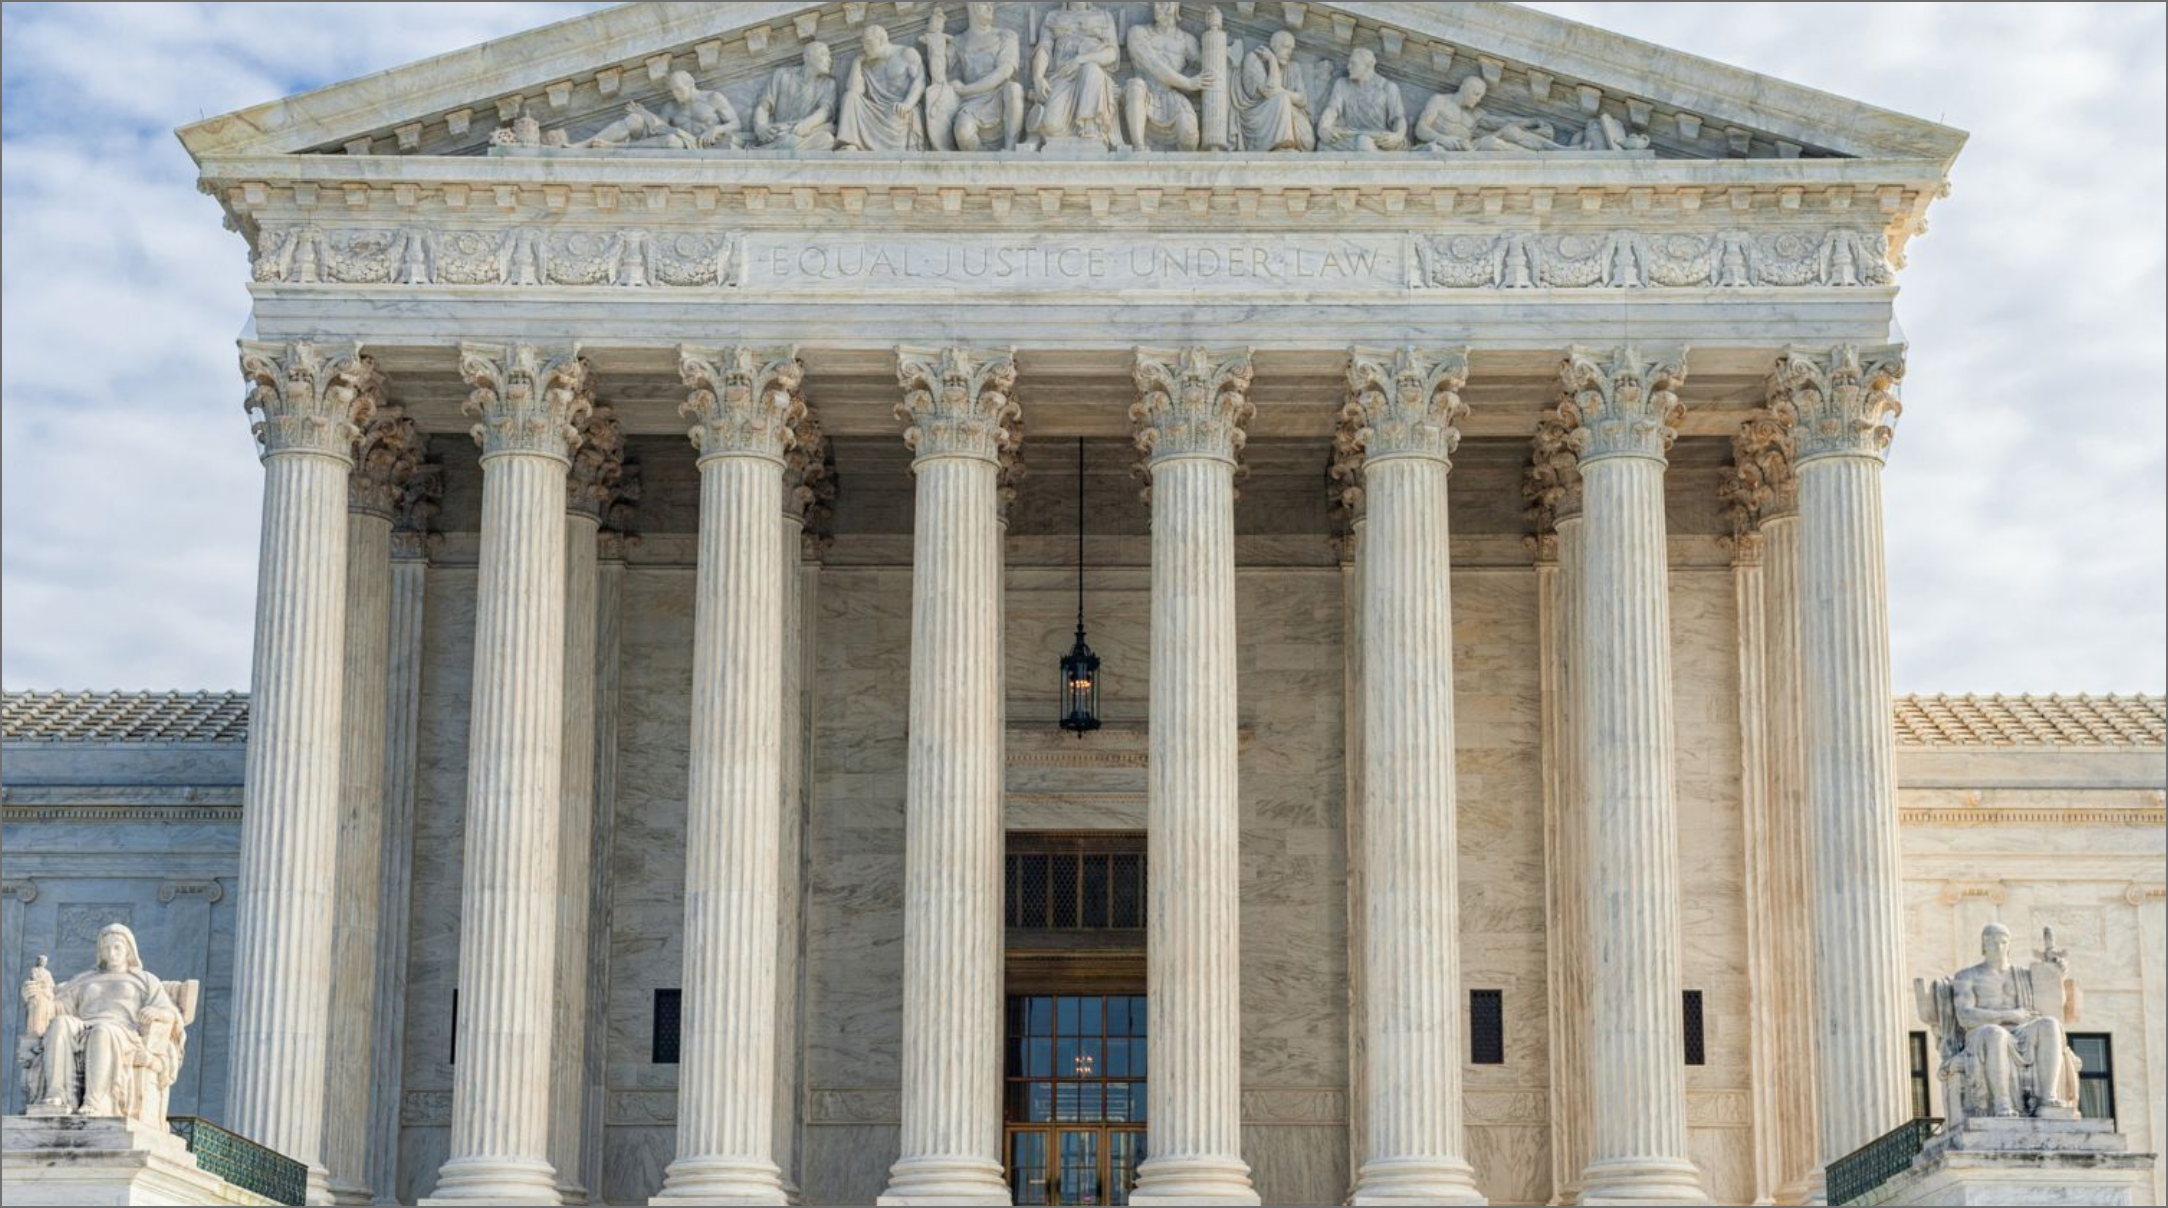 The Supreme Court of the USA